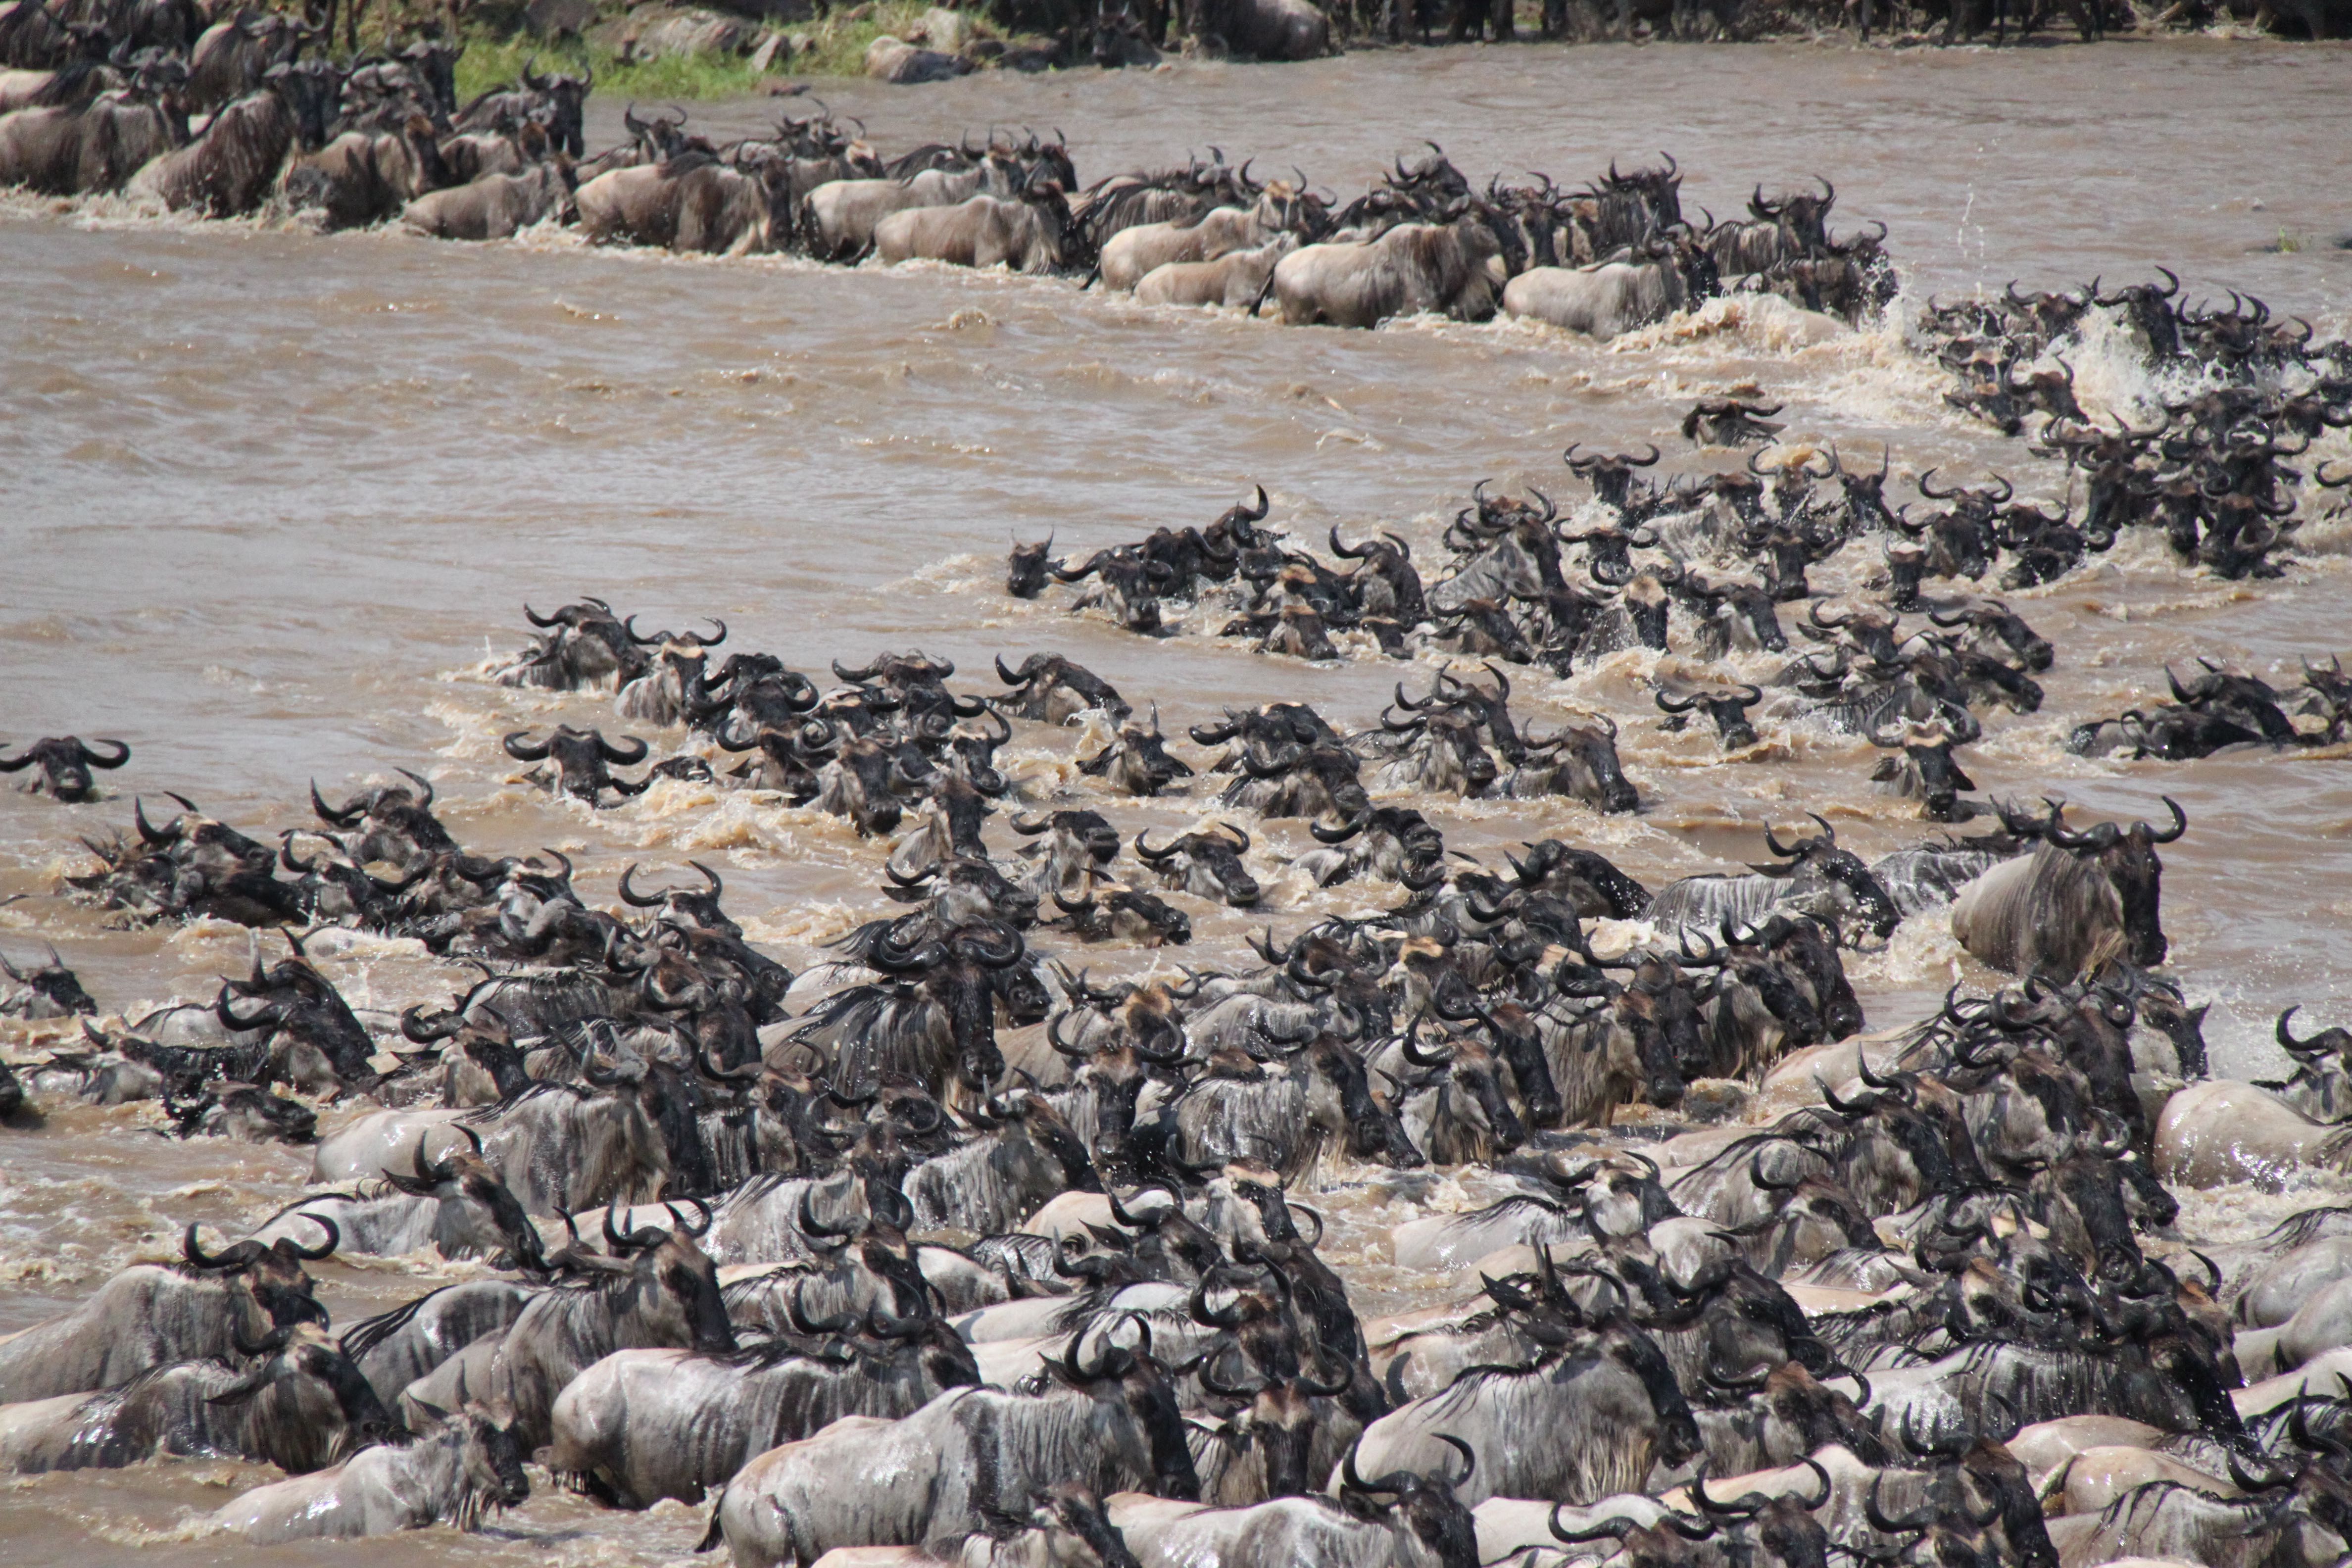 Camping Safari Great Migration Tanzania Wildebeest crossing Mara River in Serengeti National Park